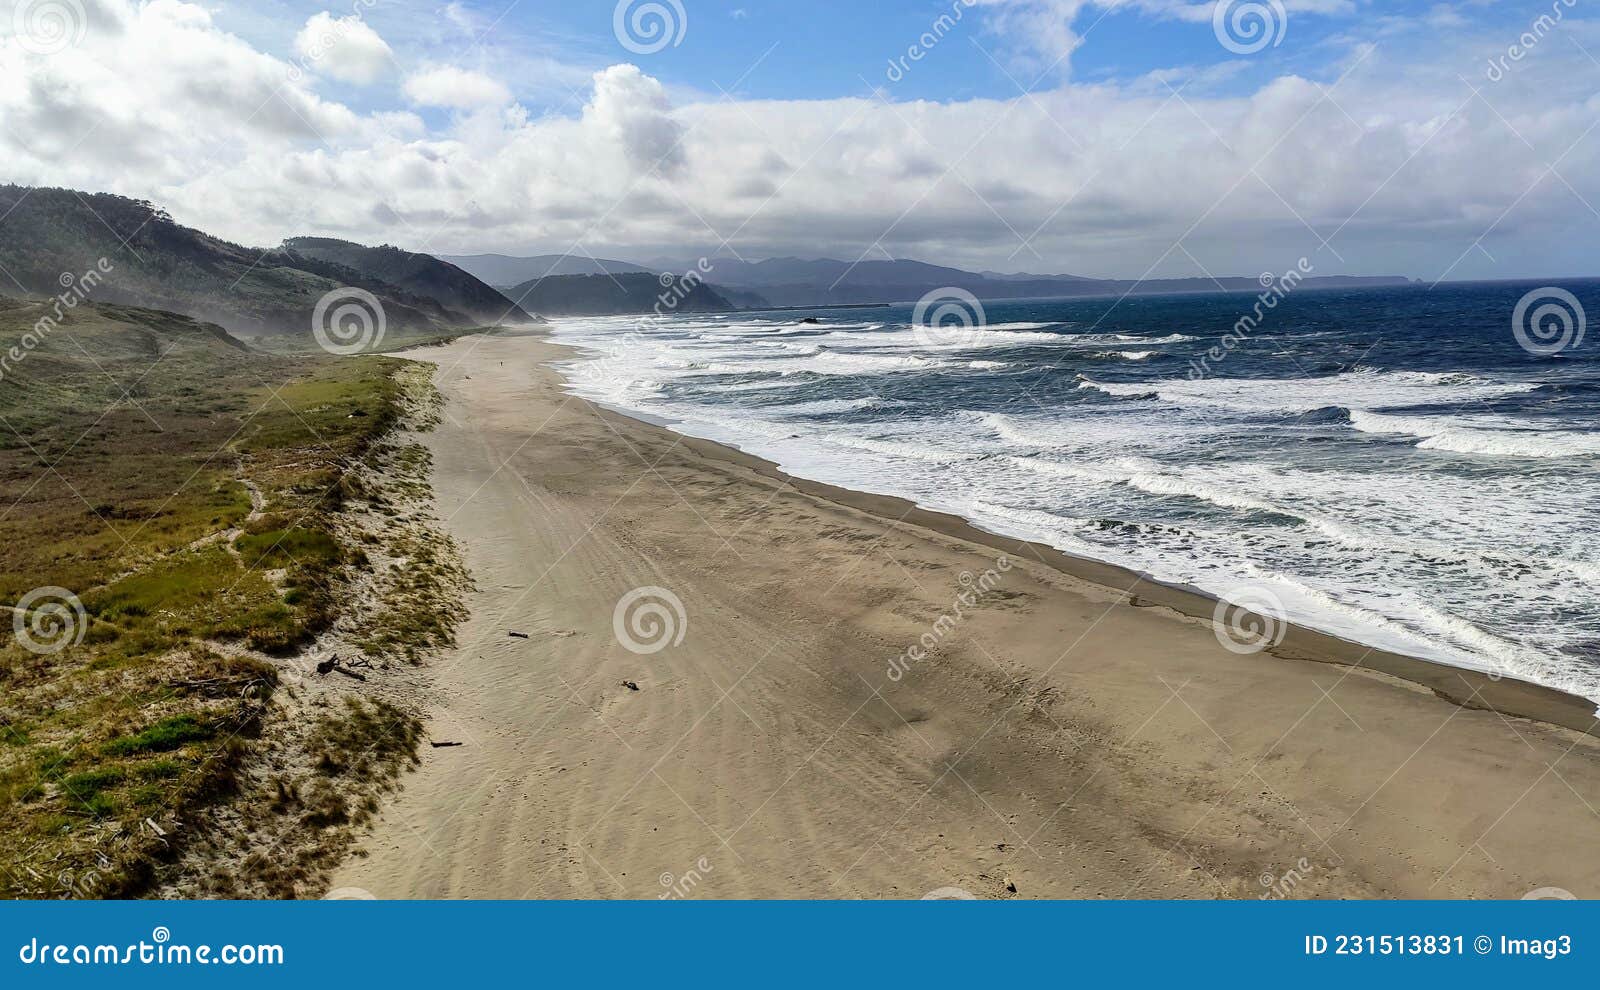 bayas or sablon beach, castrillon municipality, asturias, spain